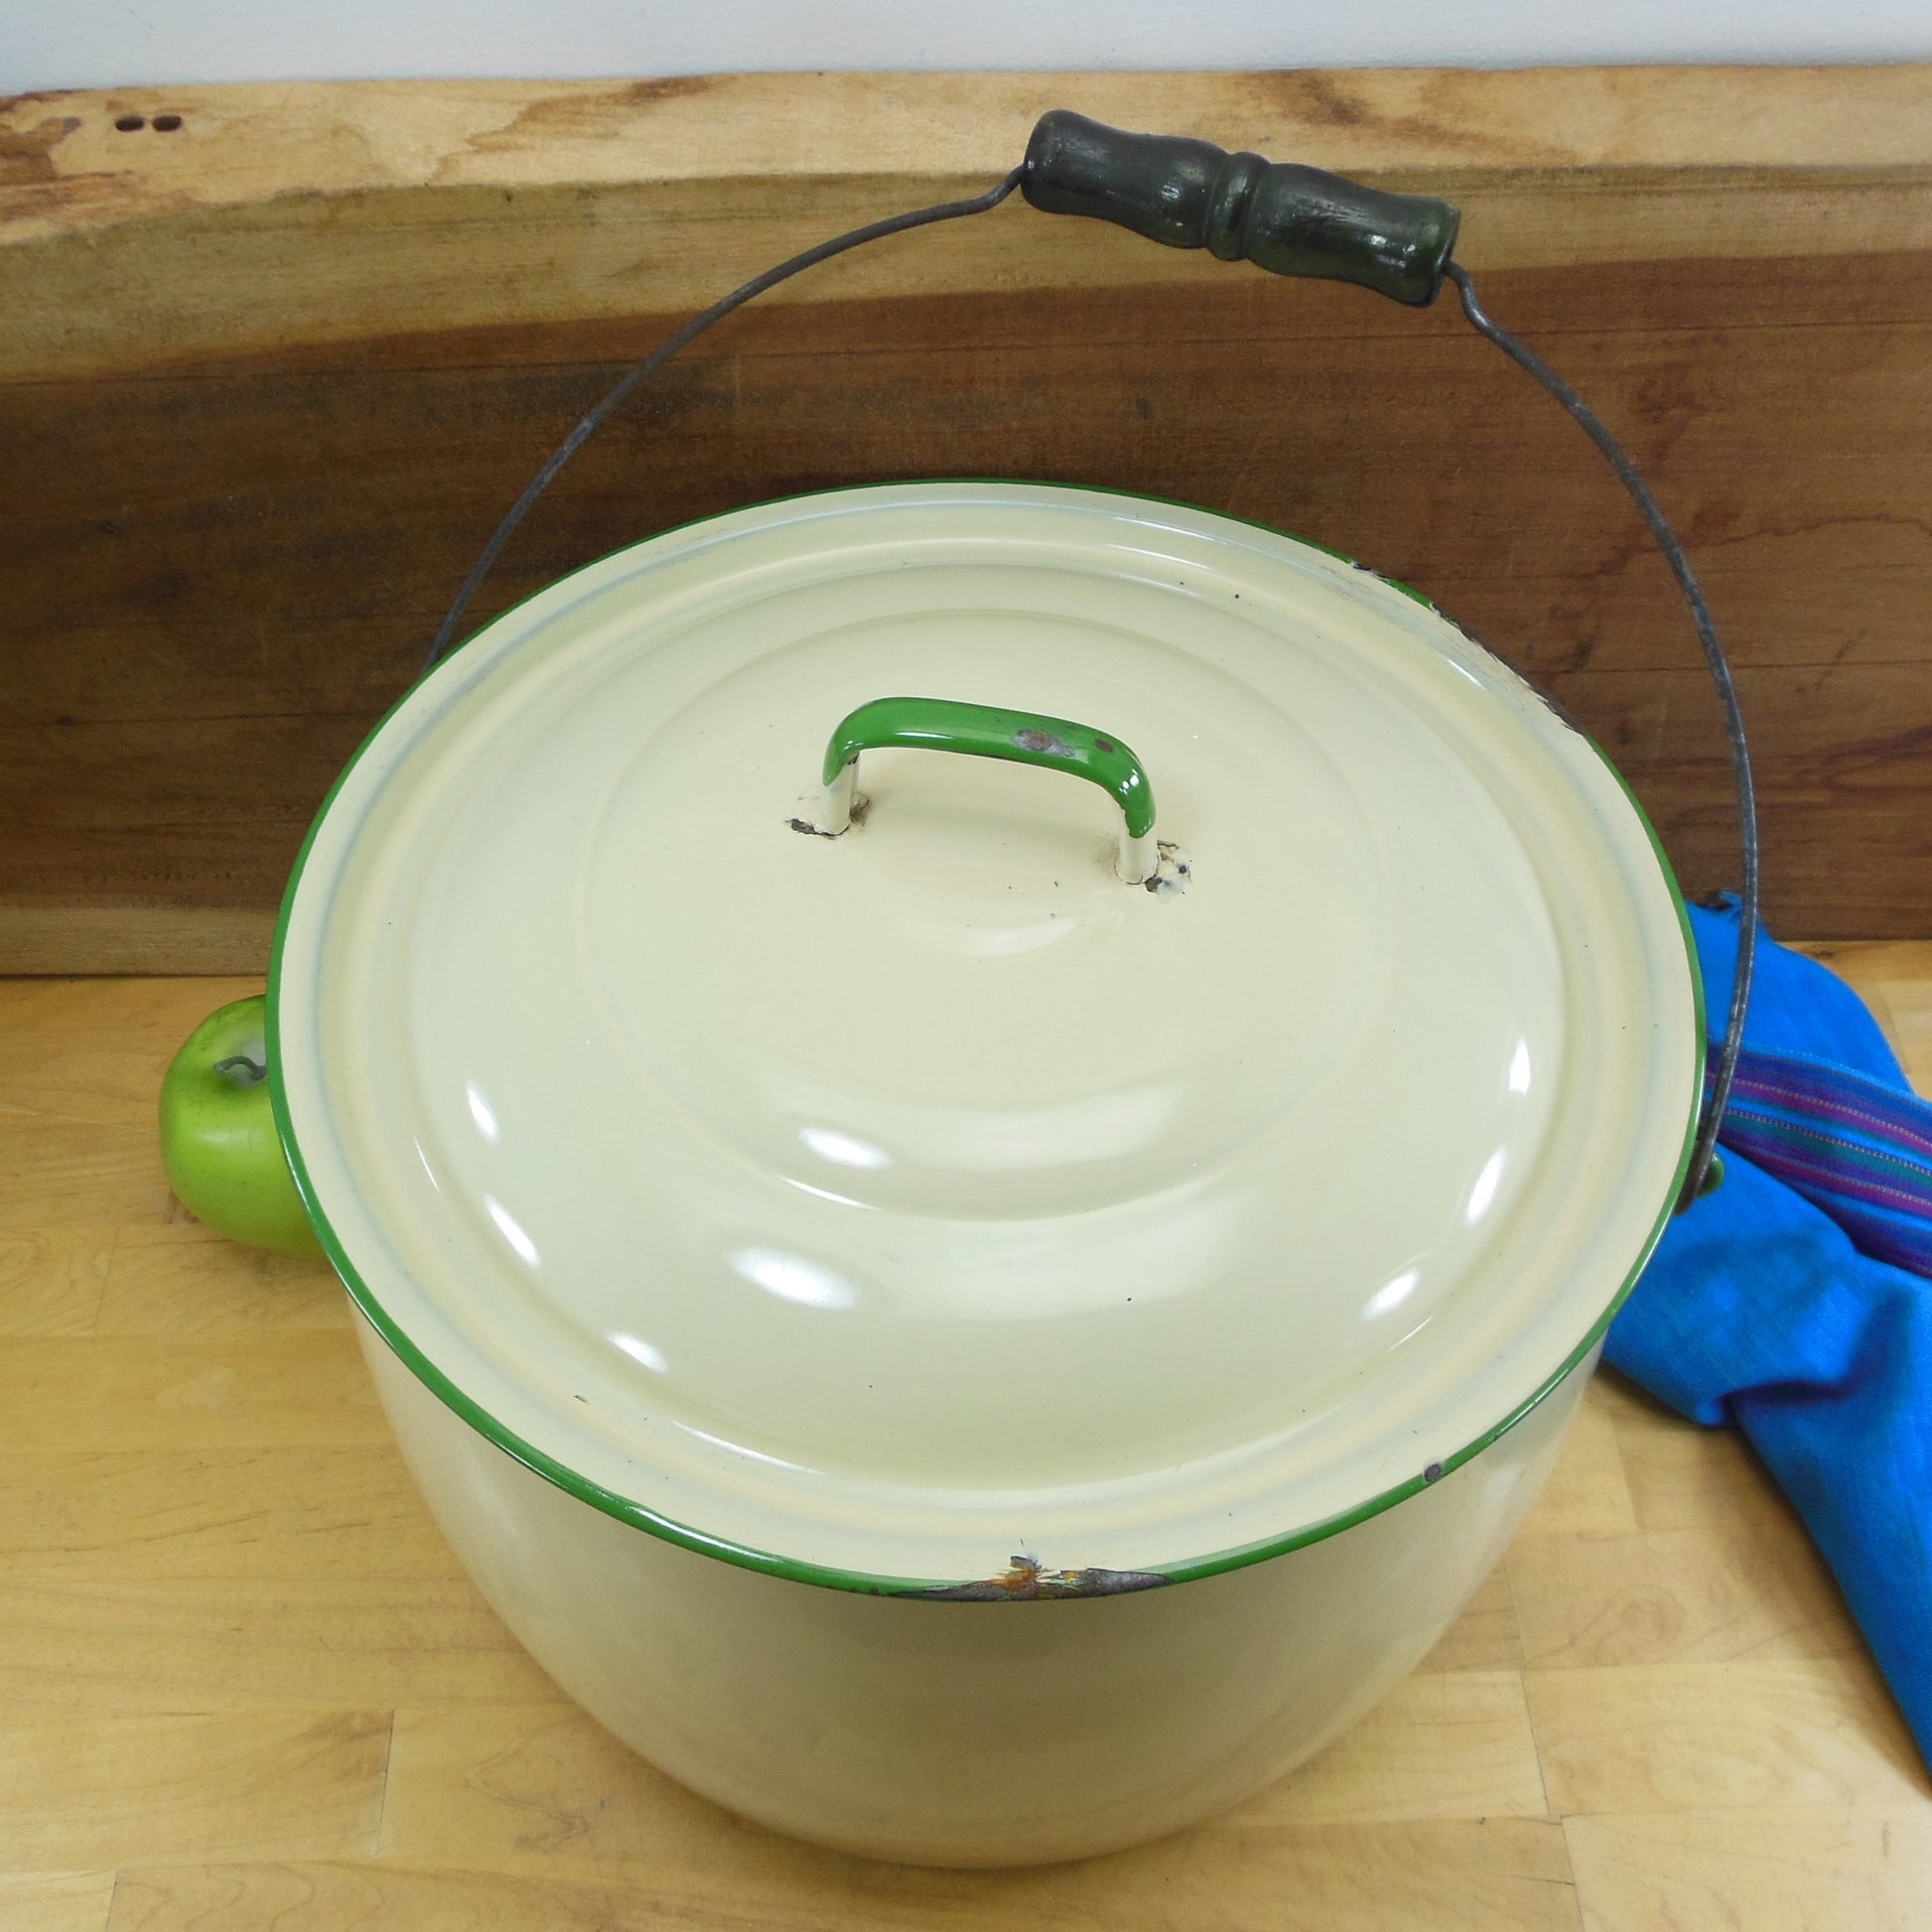 Green Enamel Cookware Set – Shiro Cedar